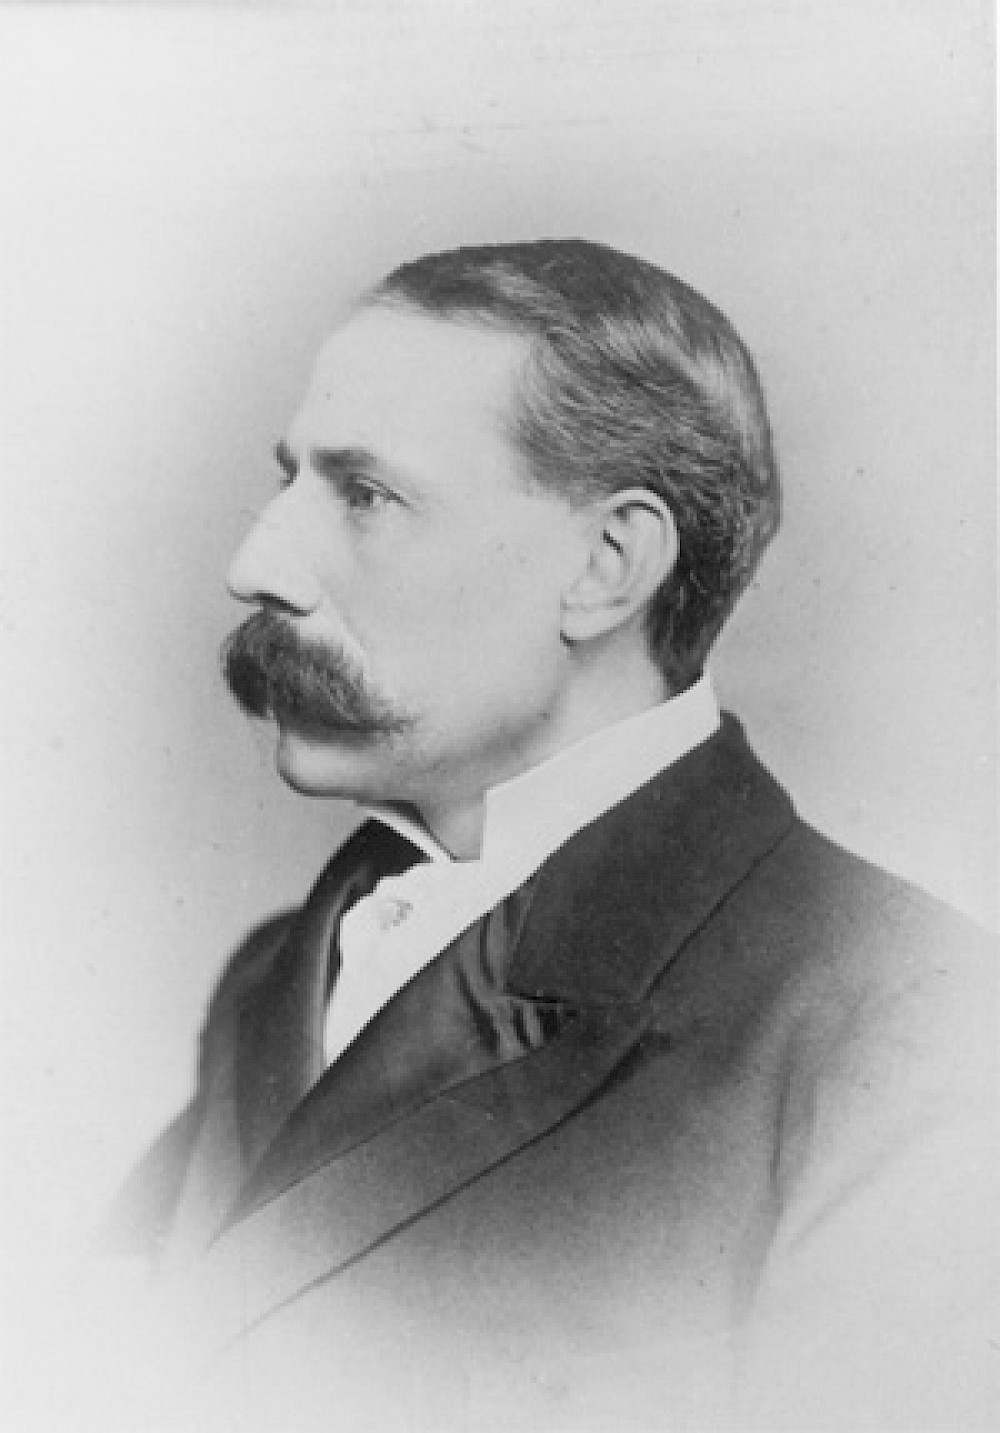 Edward Elgar in the 1890s